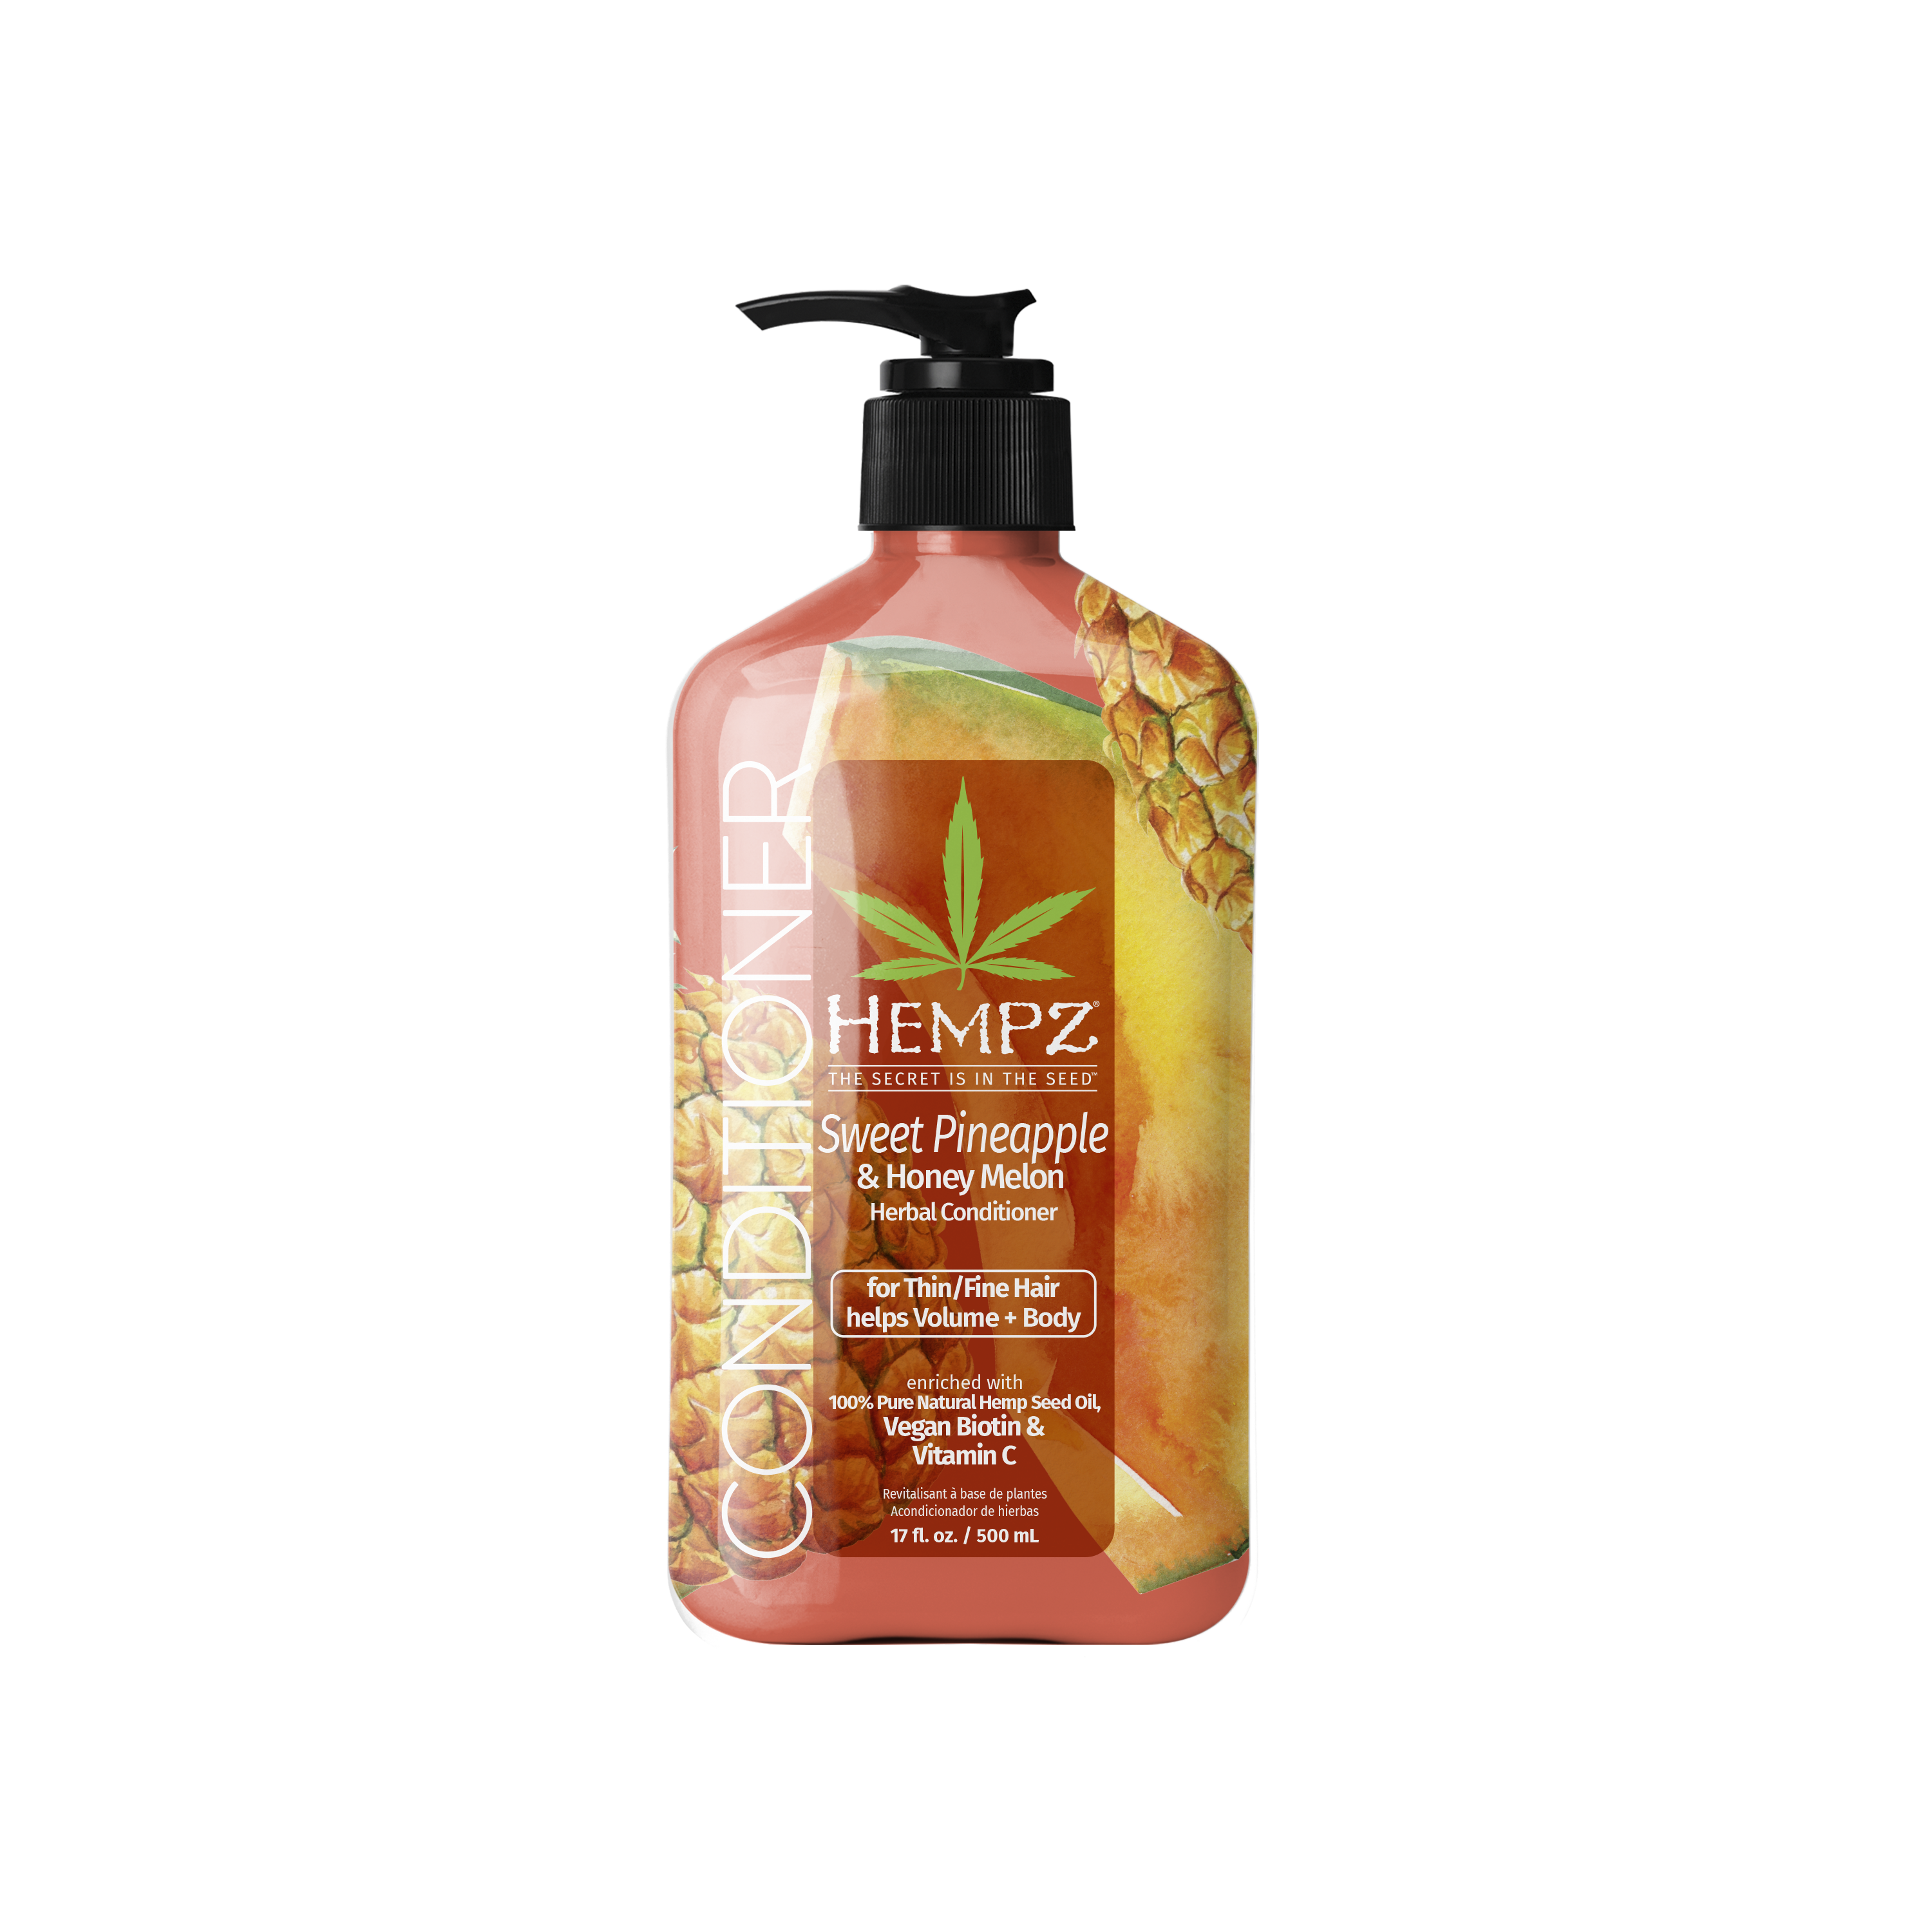 Hempz Sweet Pineapple & Honey Melon Herbal Conditioner - Creata Beauty - Professional Beauty Products